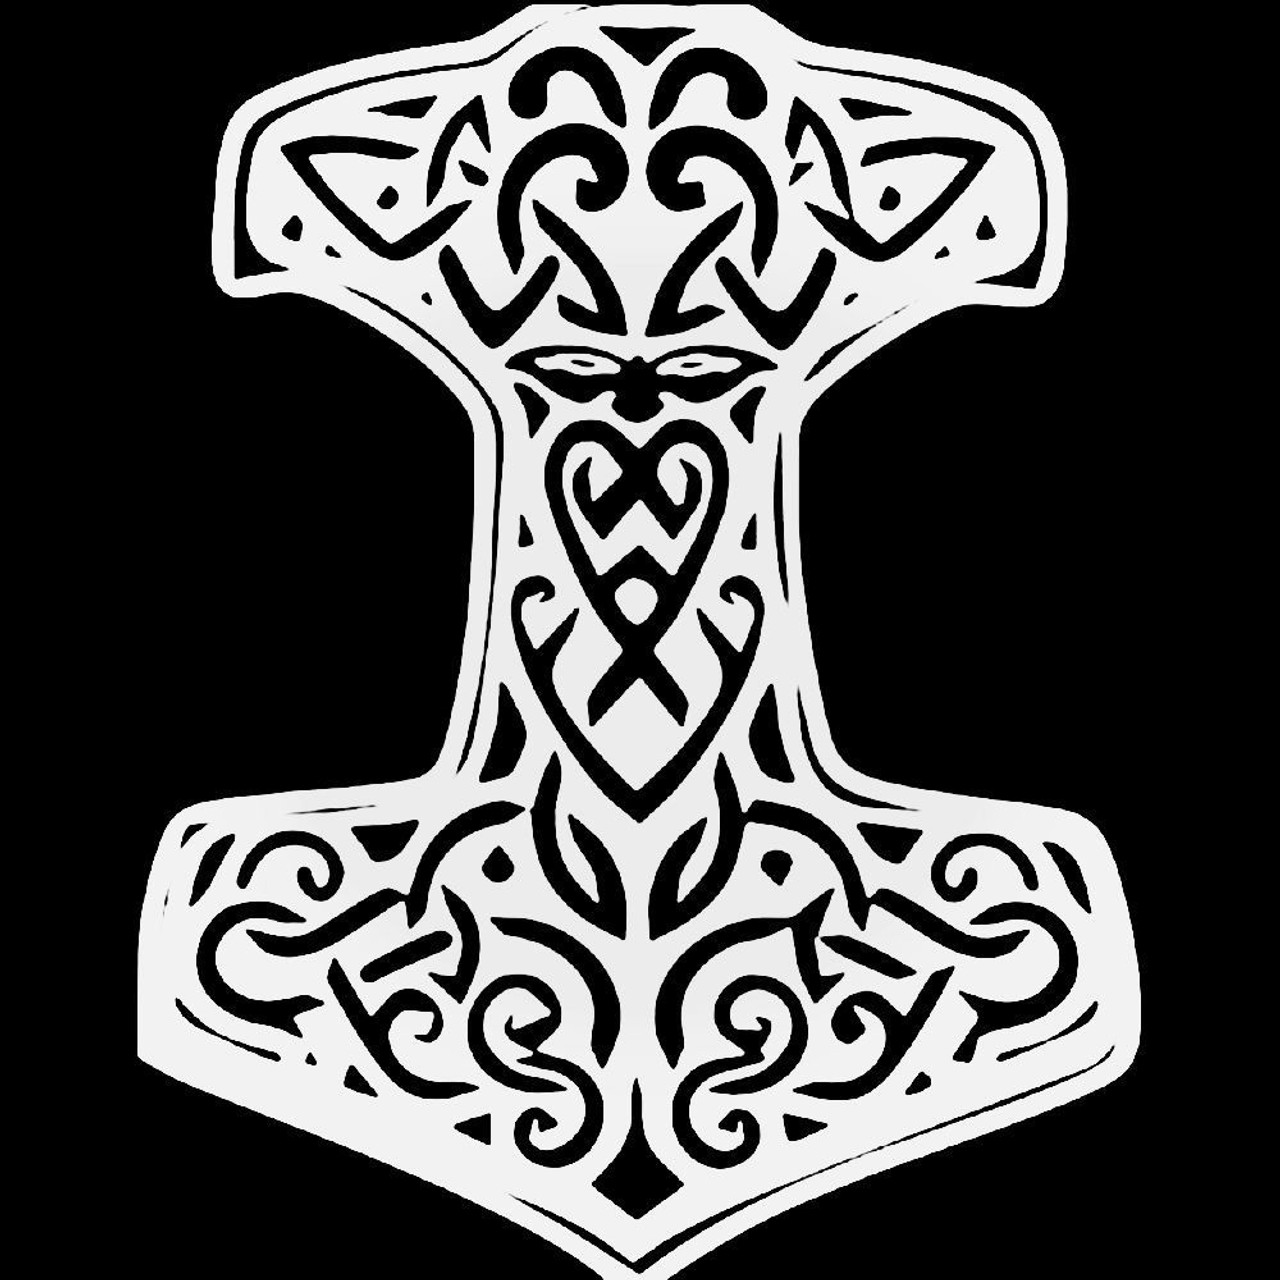 Thor Hammer Emblem Logo Vinyl Decal Sticker